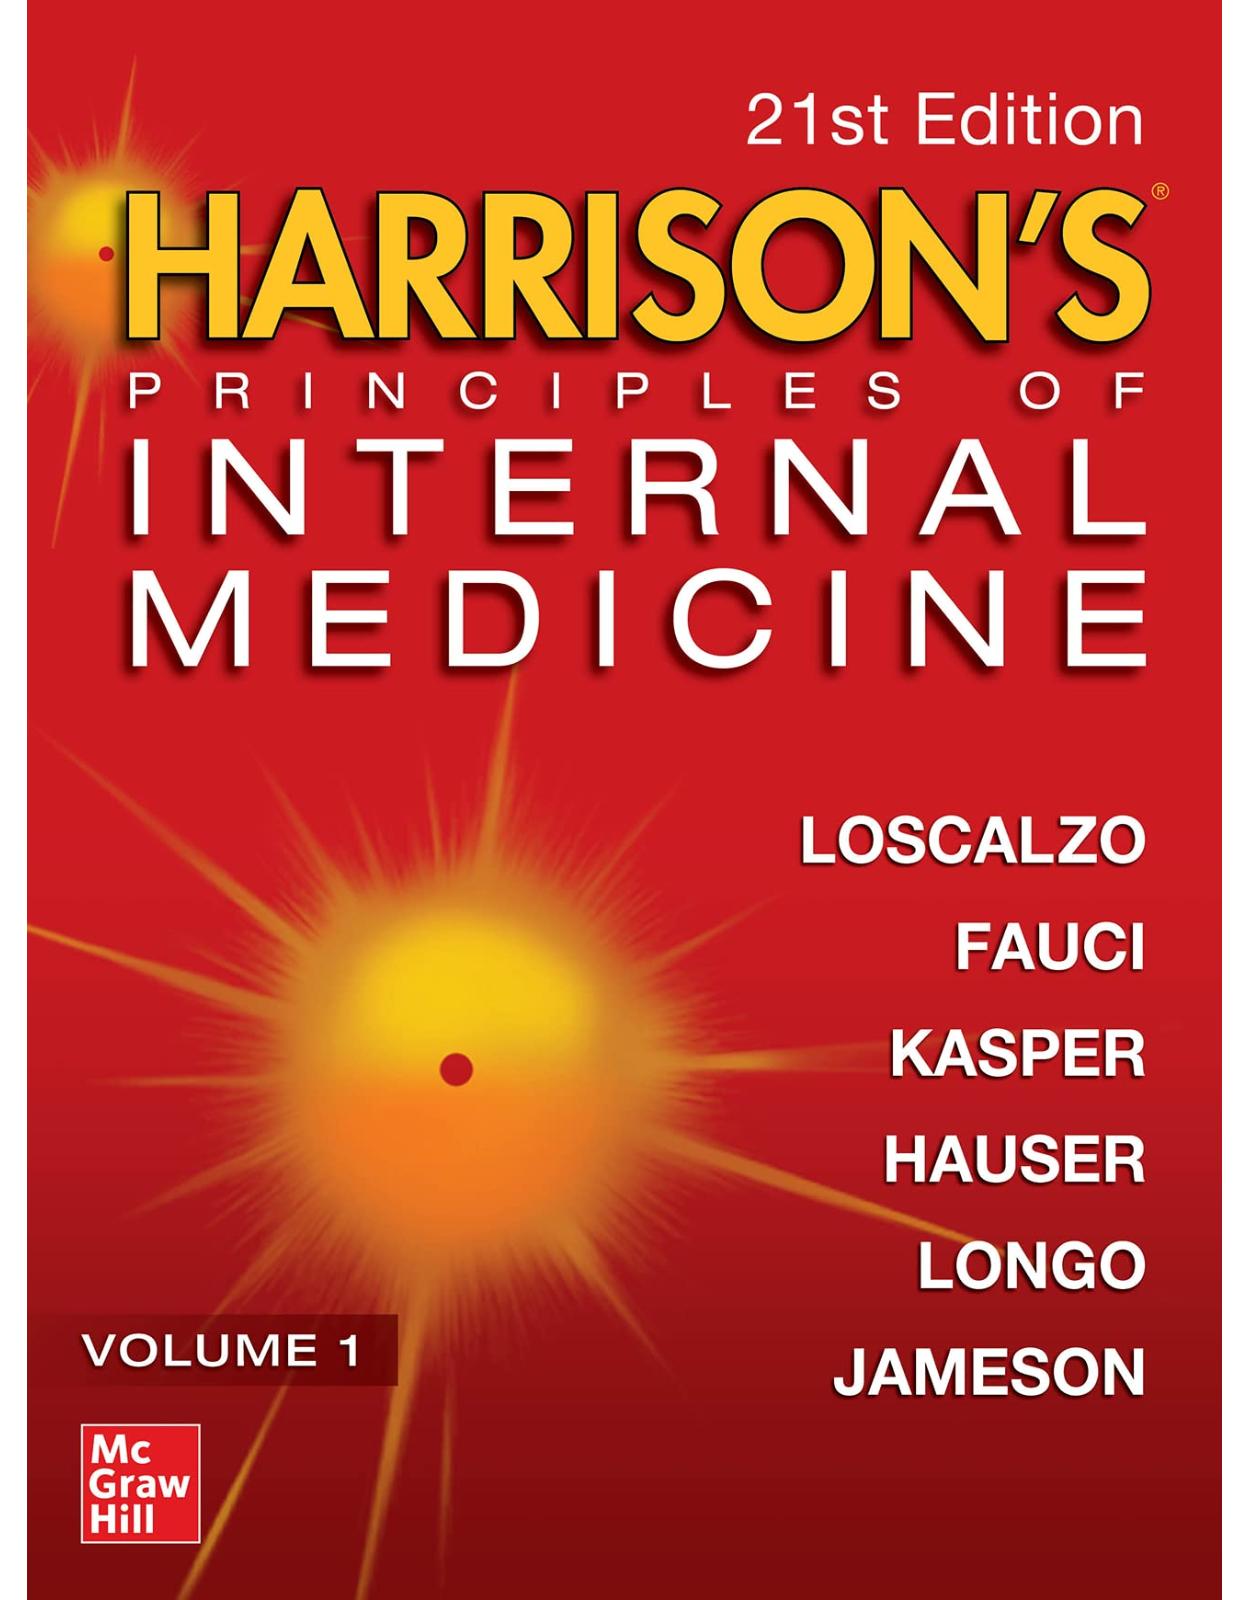 Harrison’s Principles of Internal Medicine, Twenty-First Edition (Vol.1 & Vol.2)